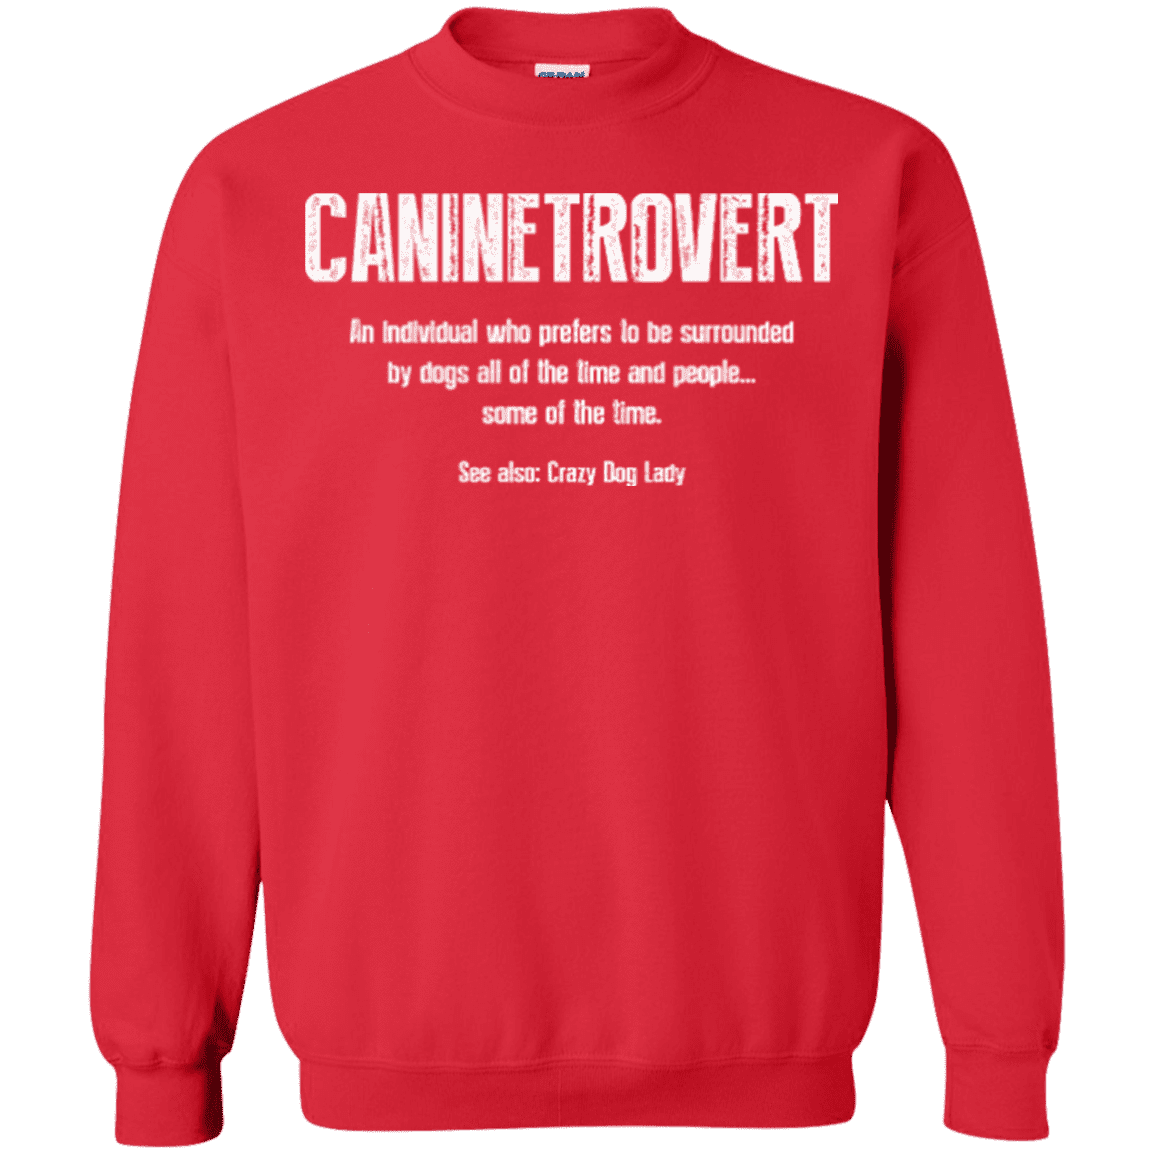 Caninetrovert - Sweatshirt.